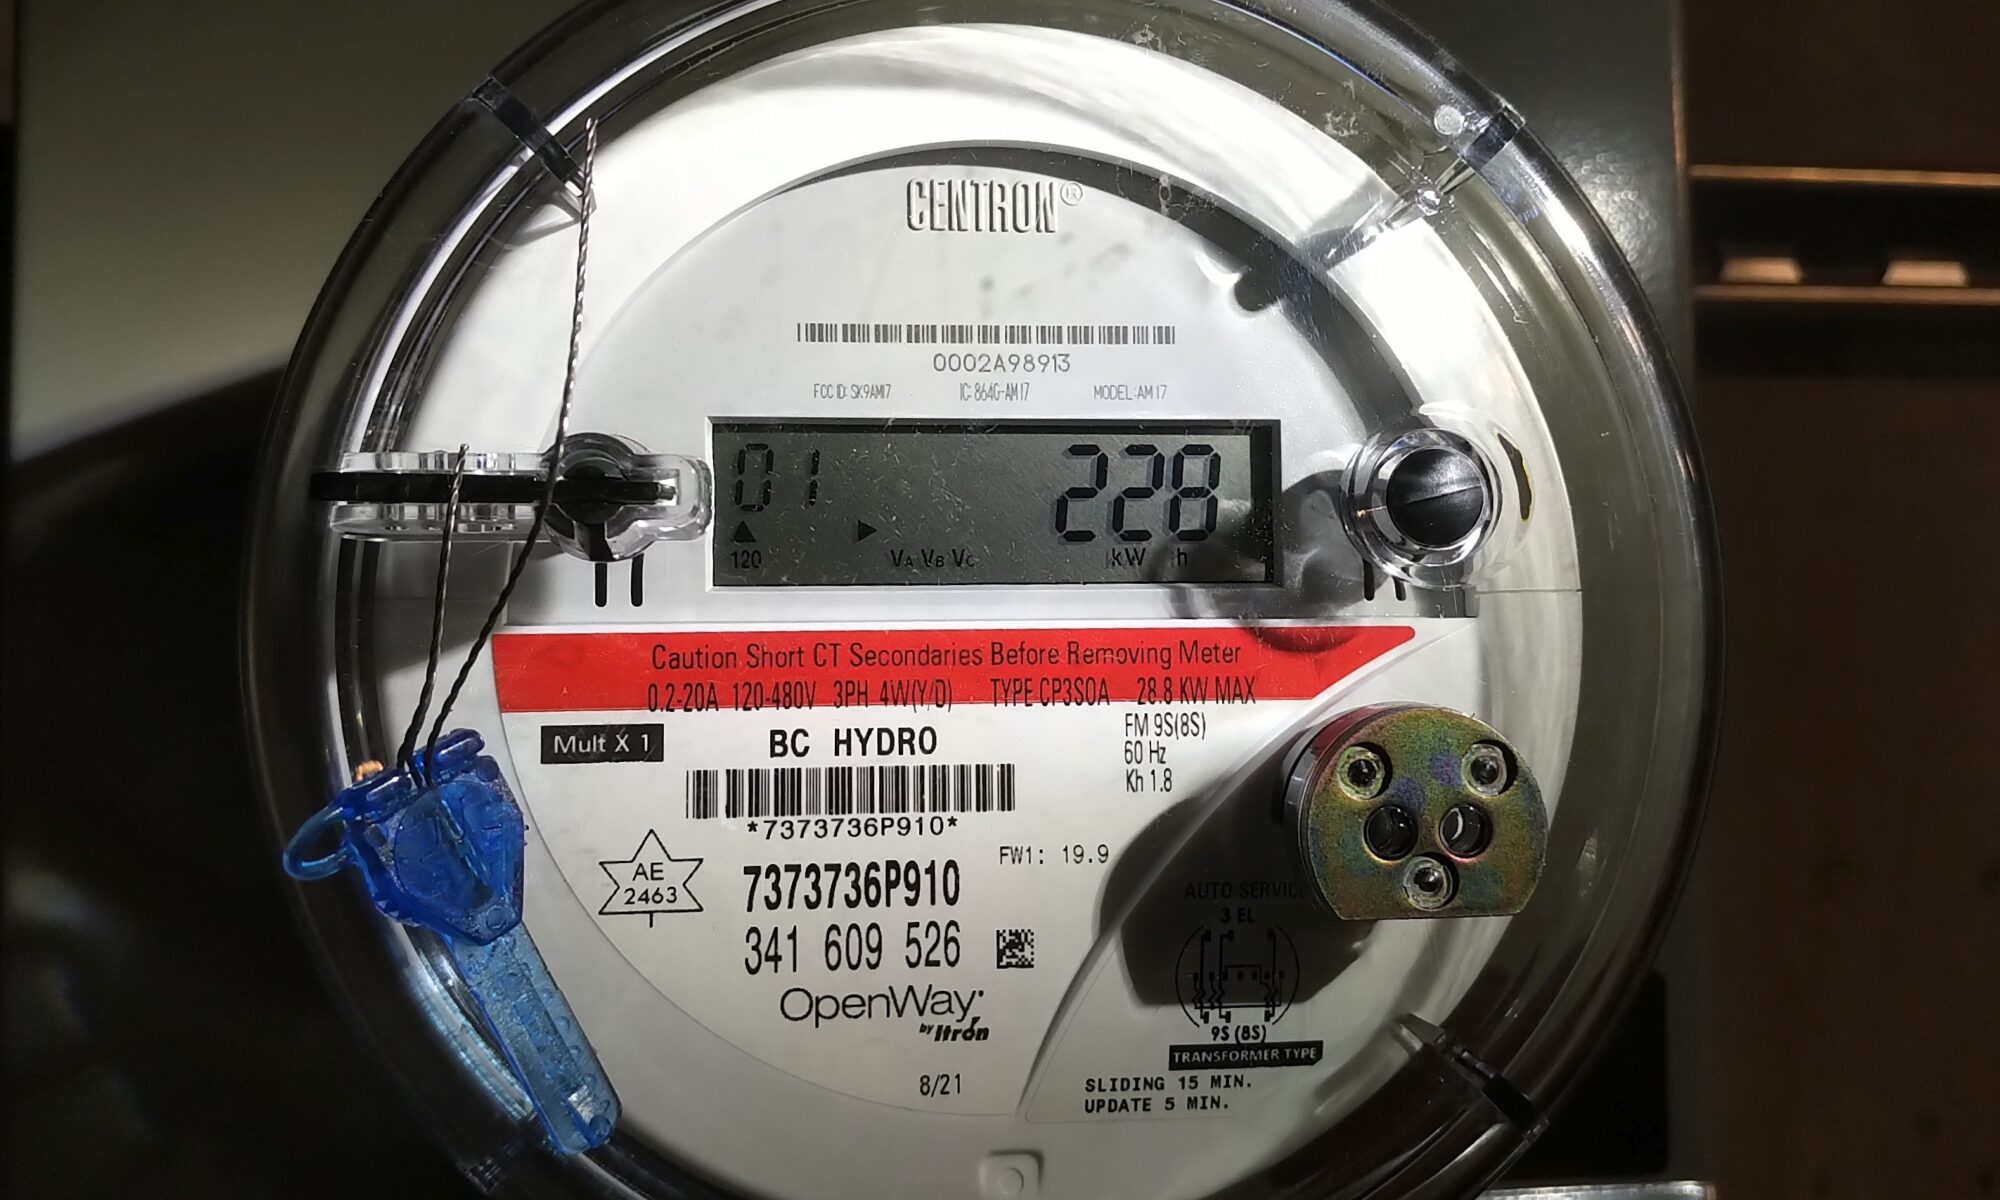 A utility grade digital smart electricity meter